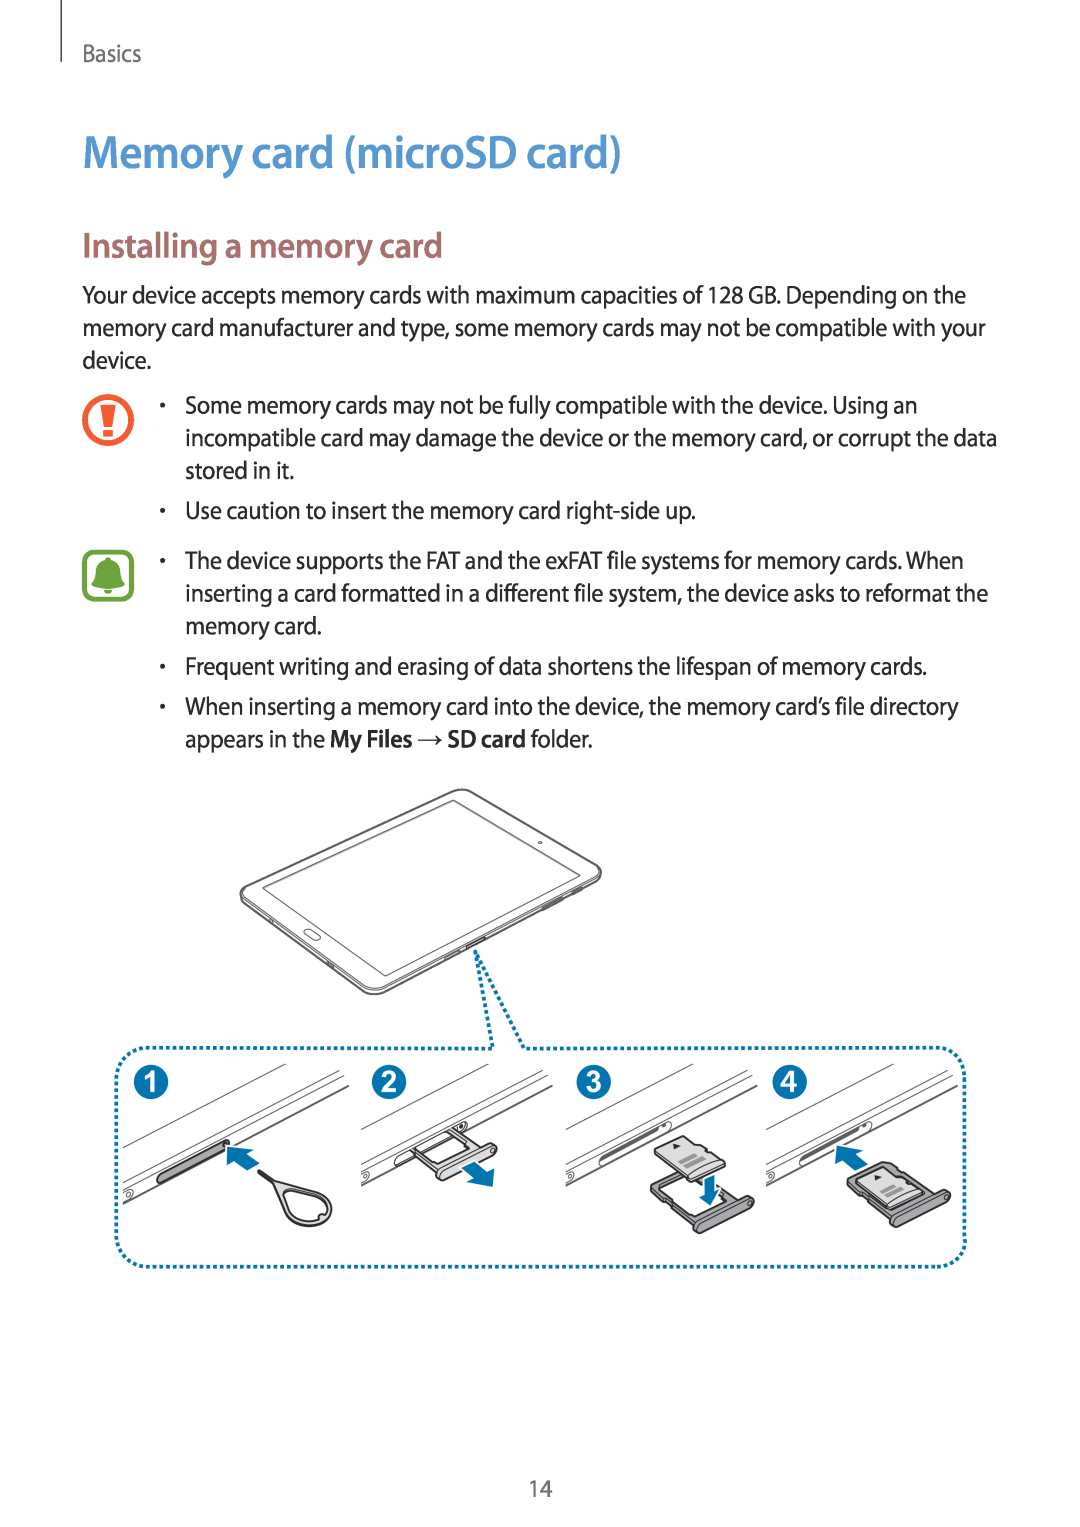 Samsung SM-T719NZKEPHE, SM-T819NZKEDBT, SM-T719NZKEDBT manual Memory card microSD card, Installing a memory card, Basics 